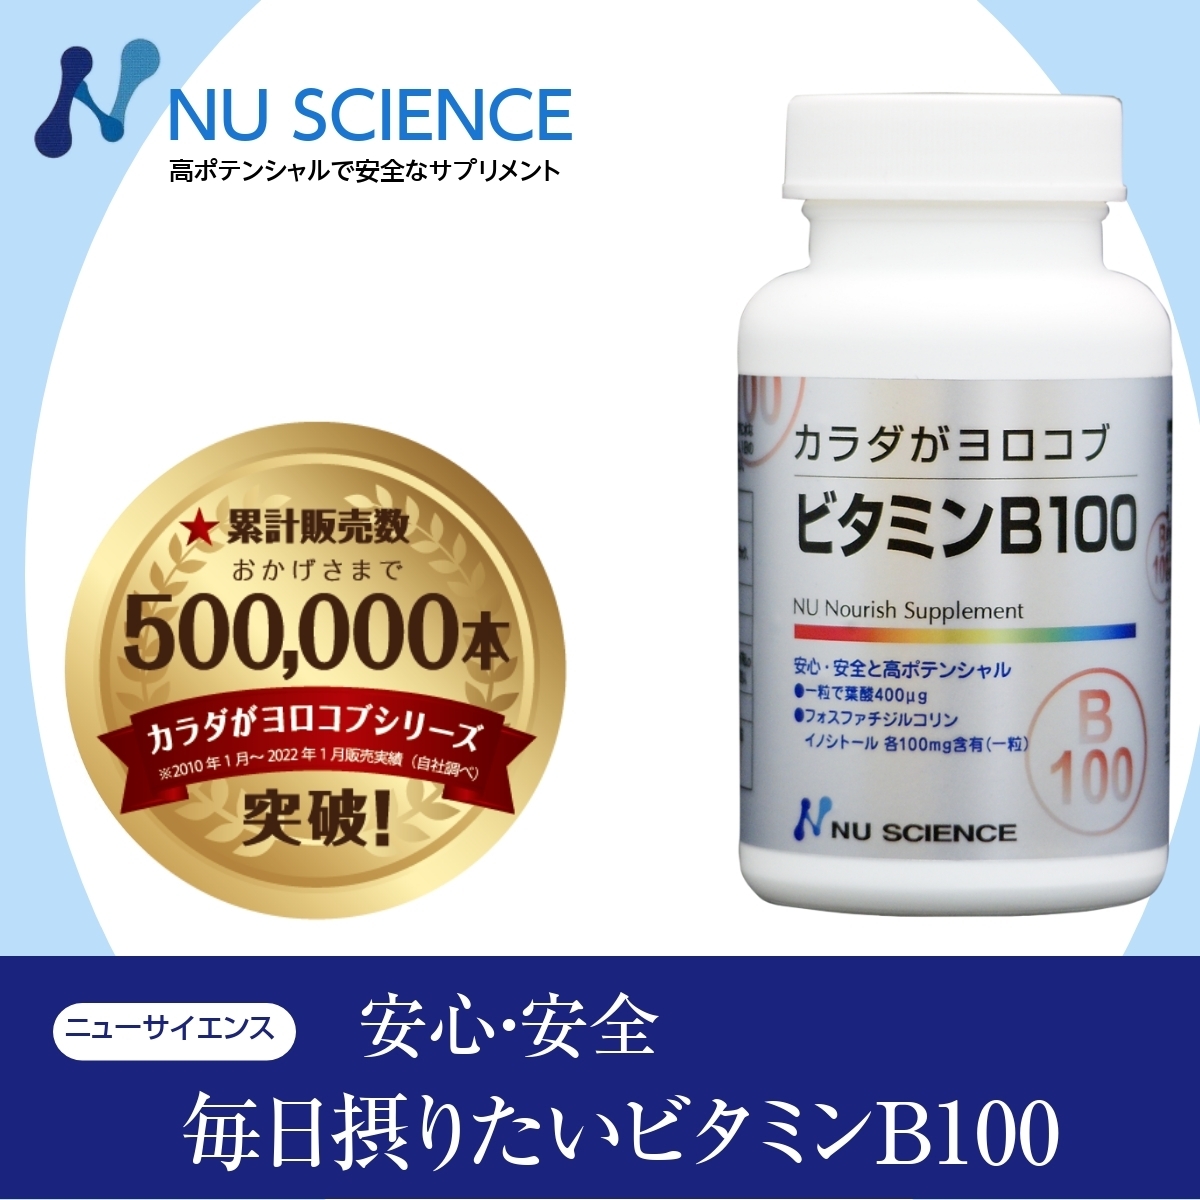 kalada.yo Logo b vitamin B100 new science 60 bead vitamin supplement 